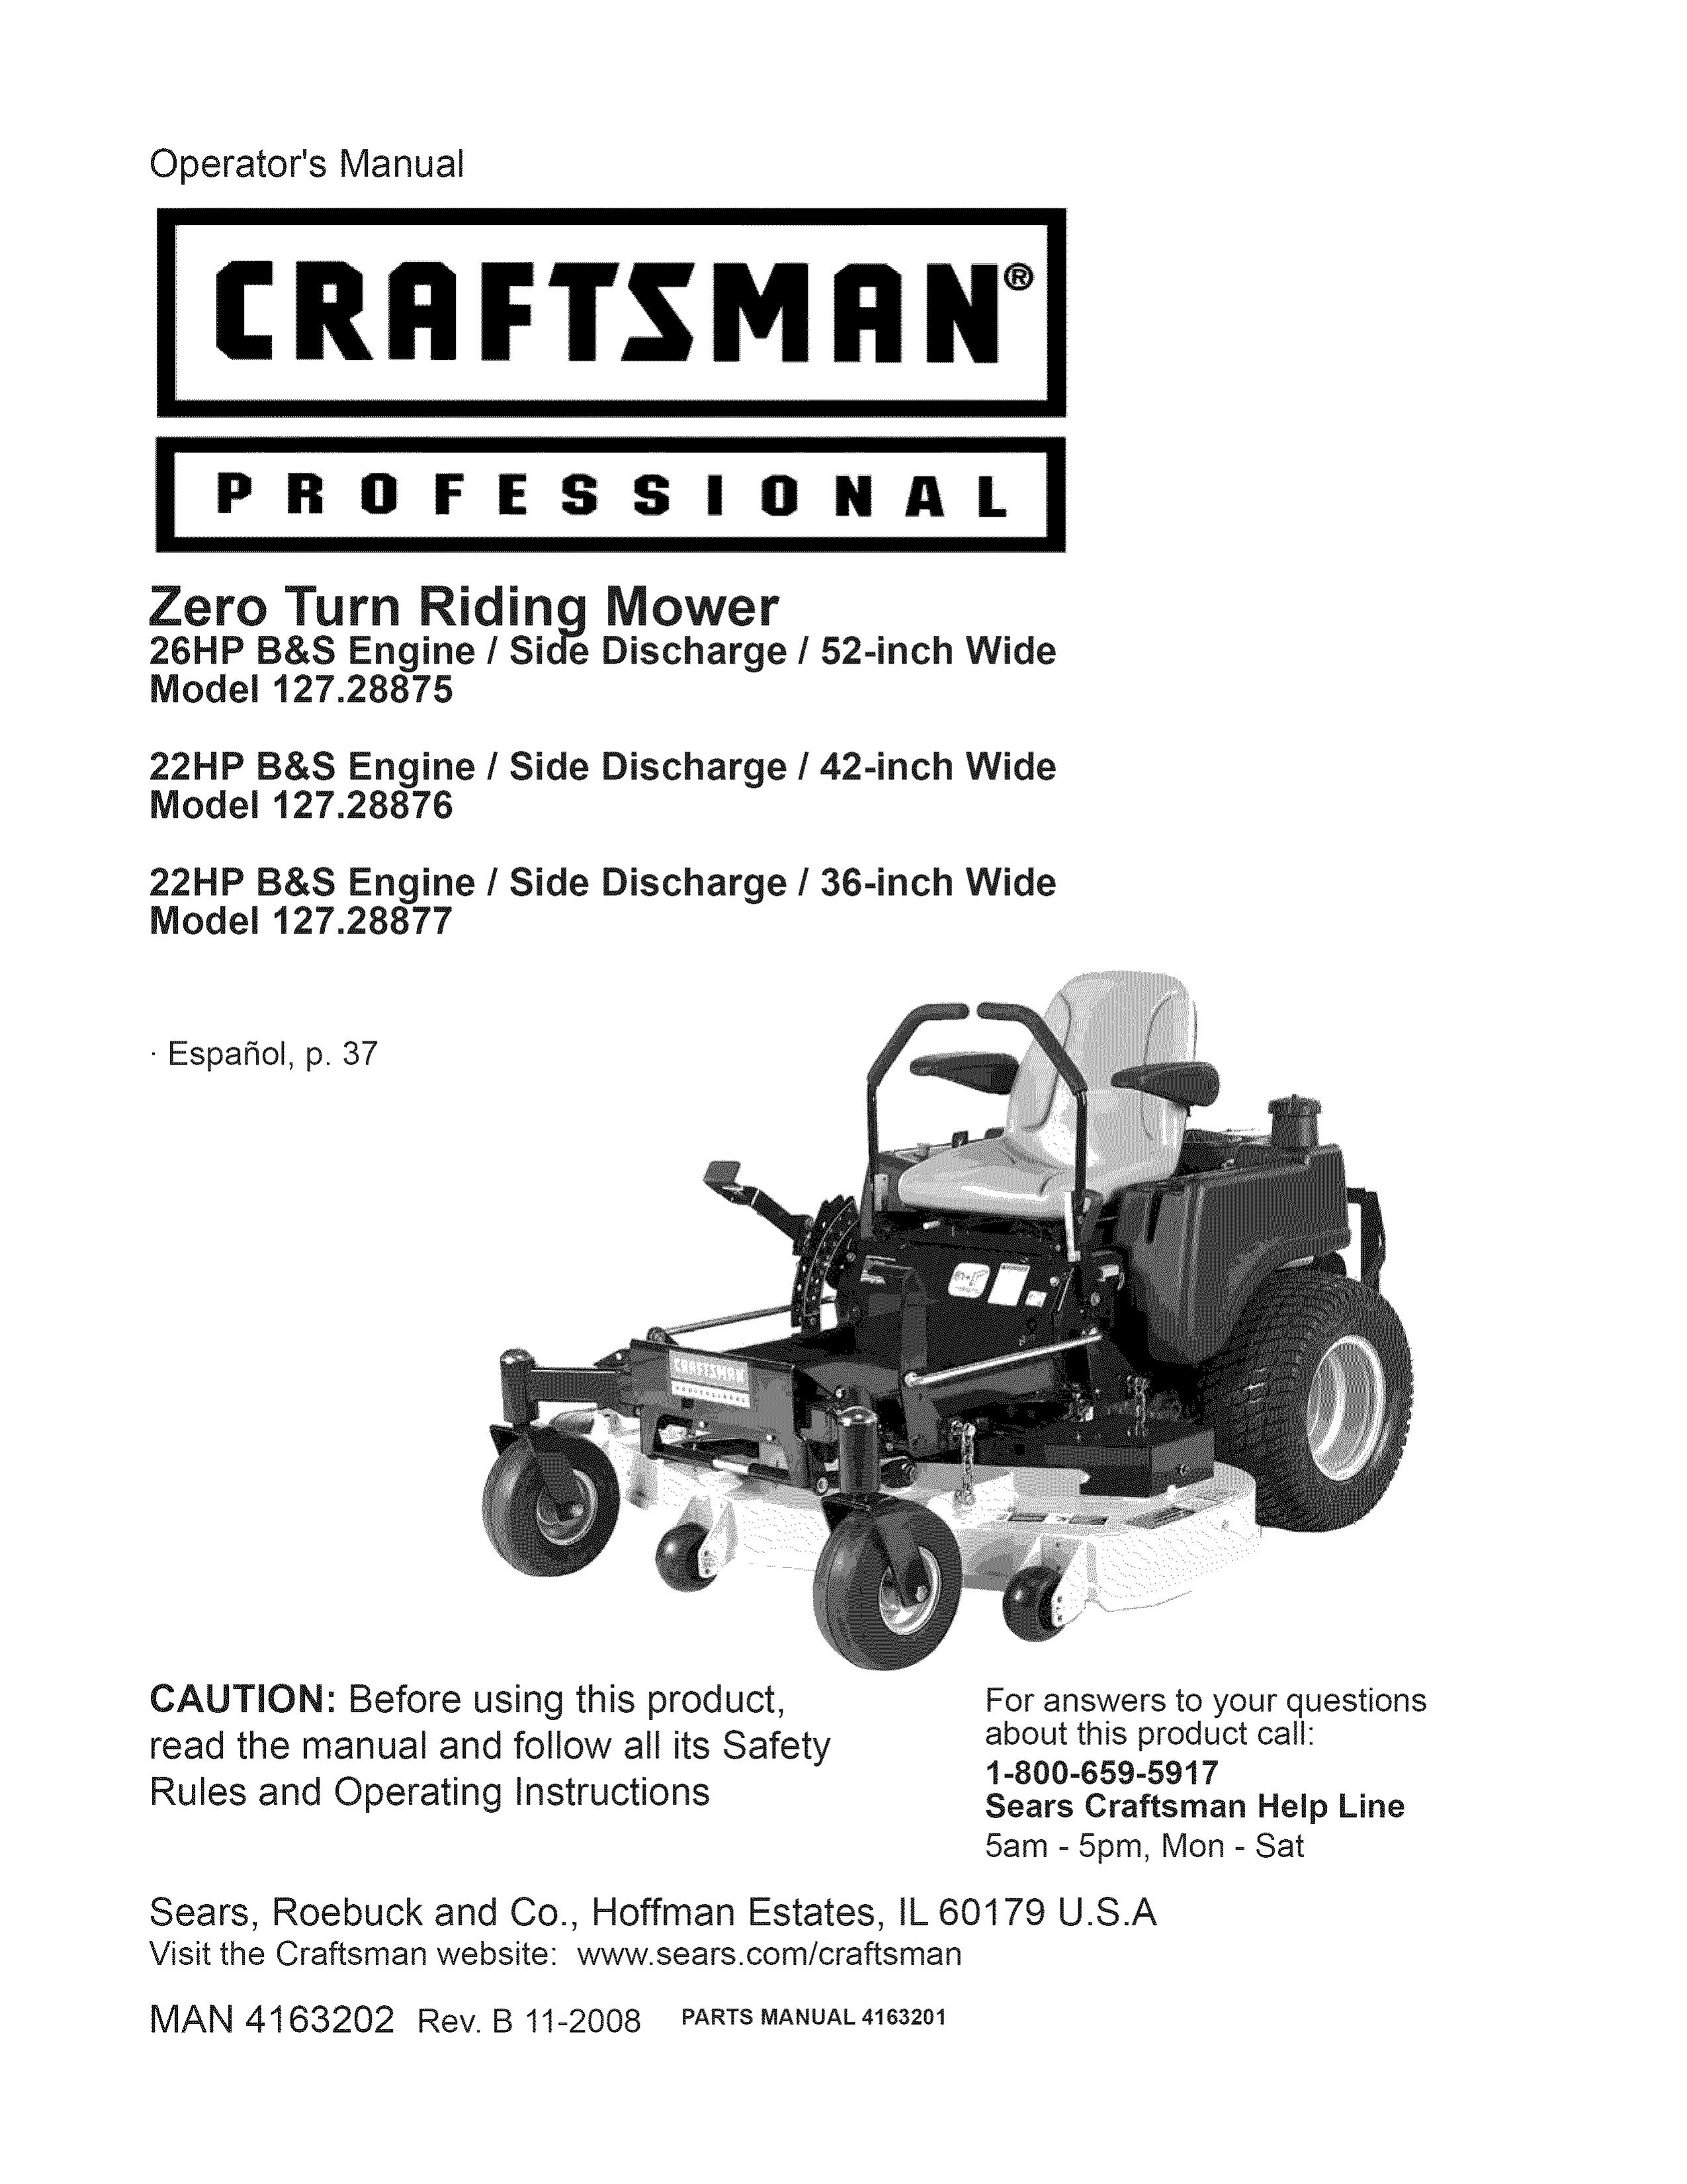 Craftsman 127.28876 Lawn Mower User Manual